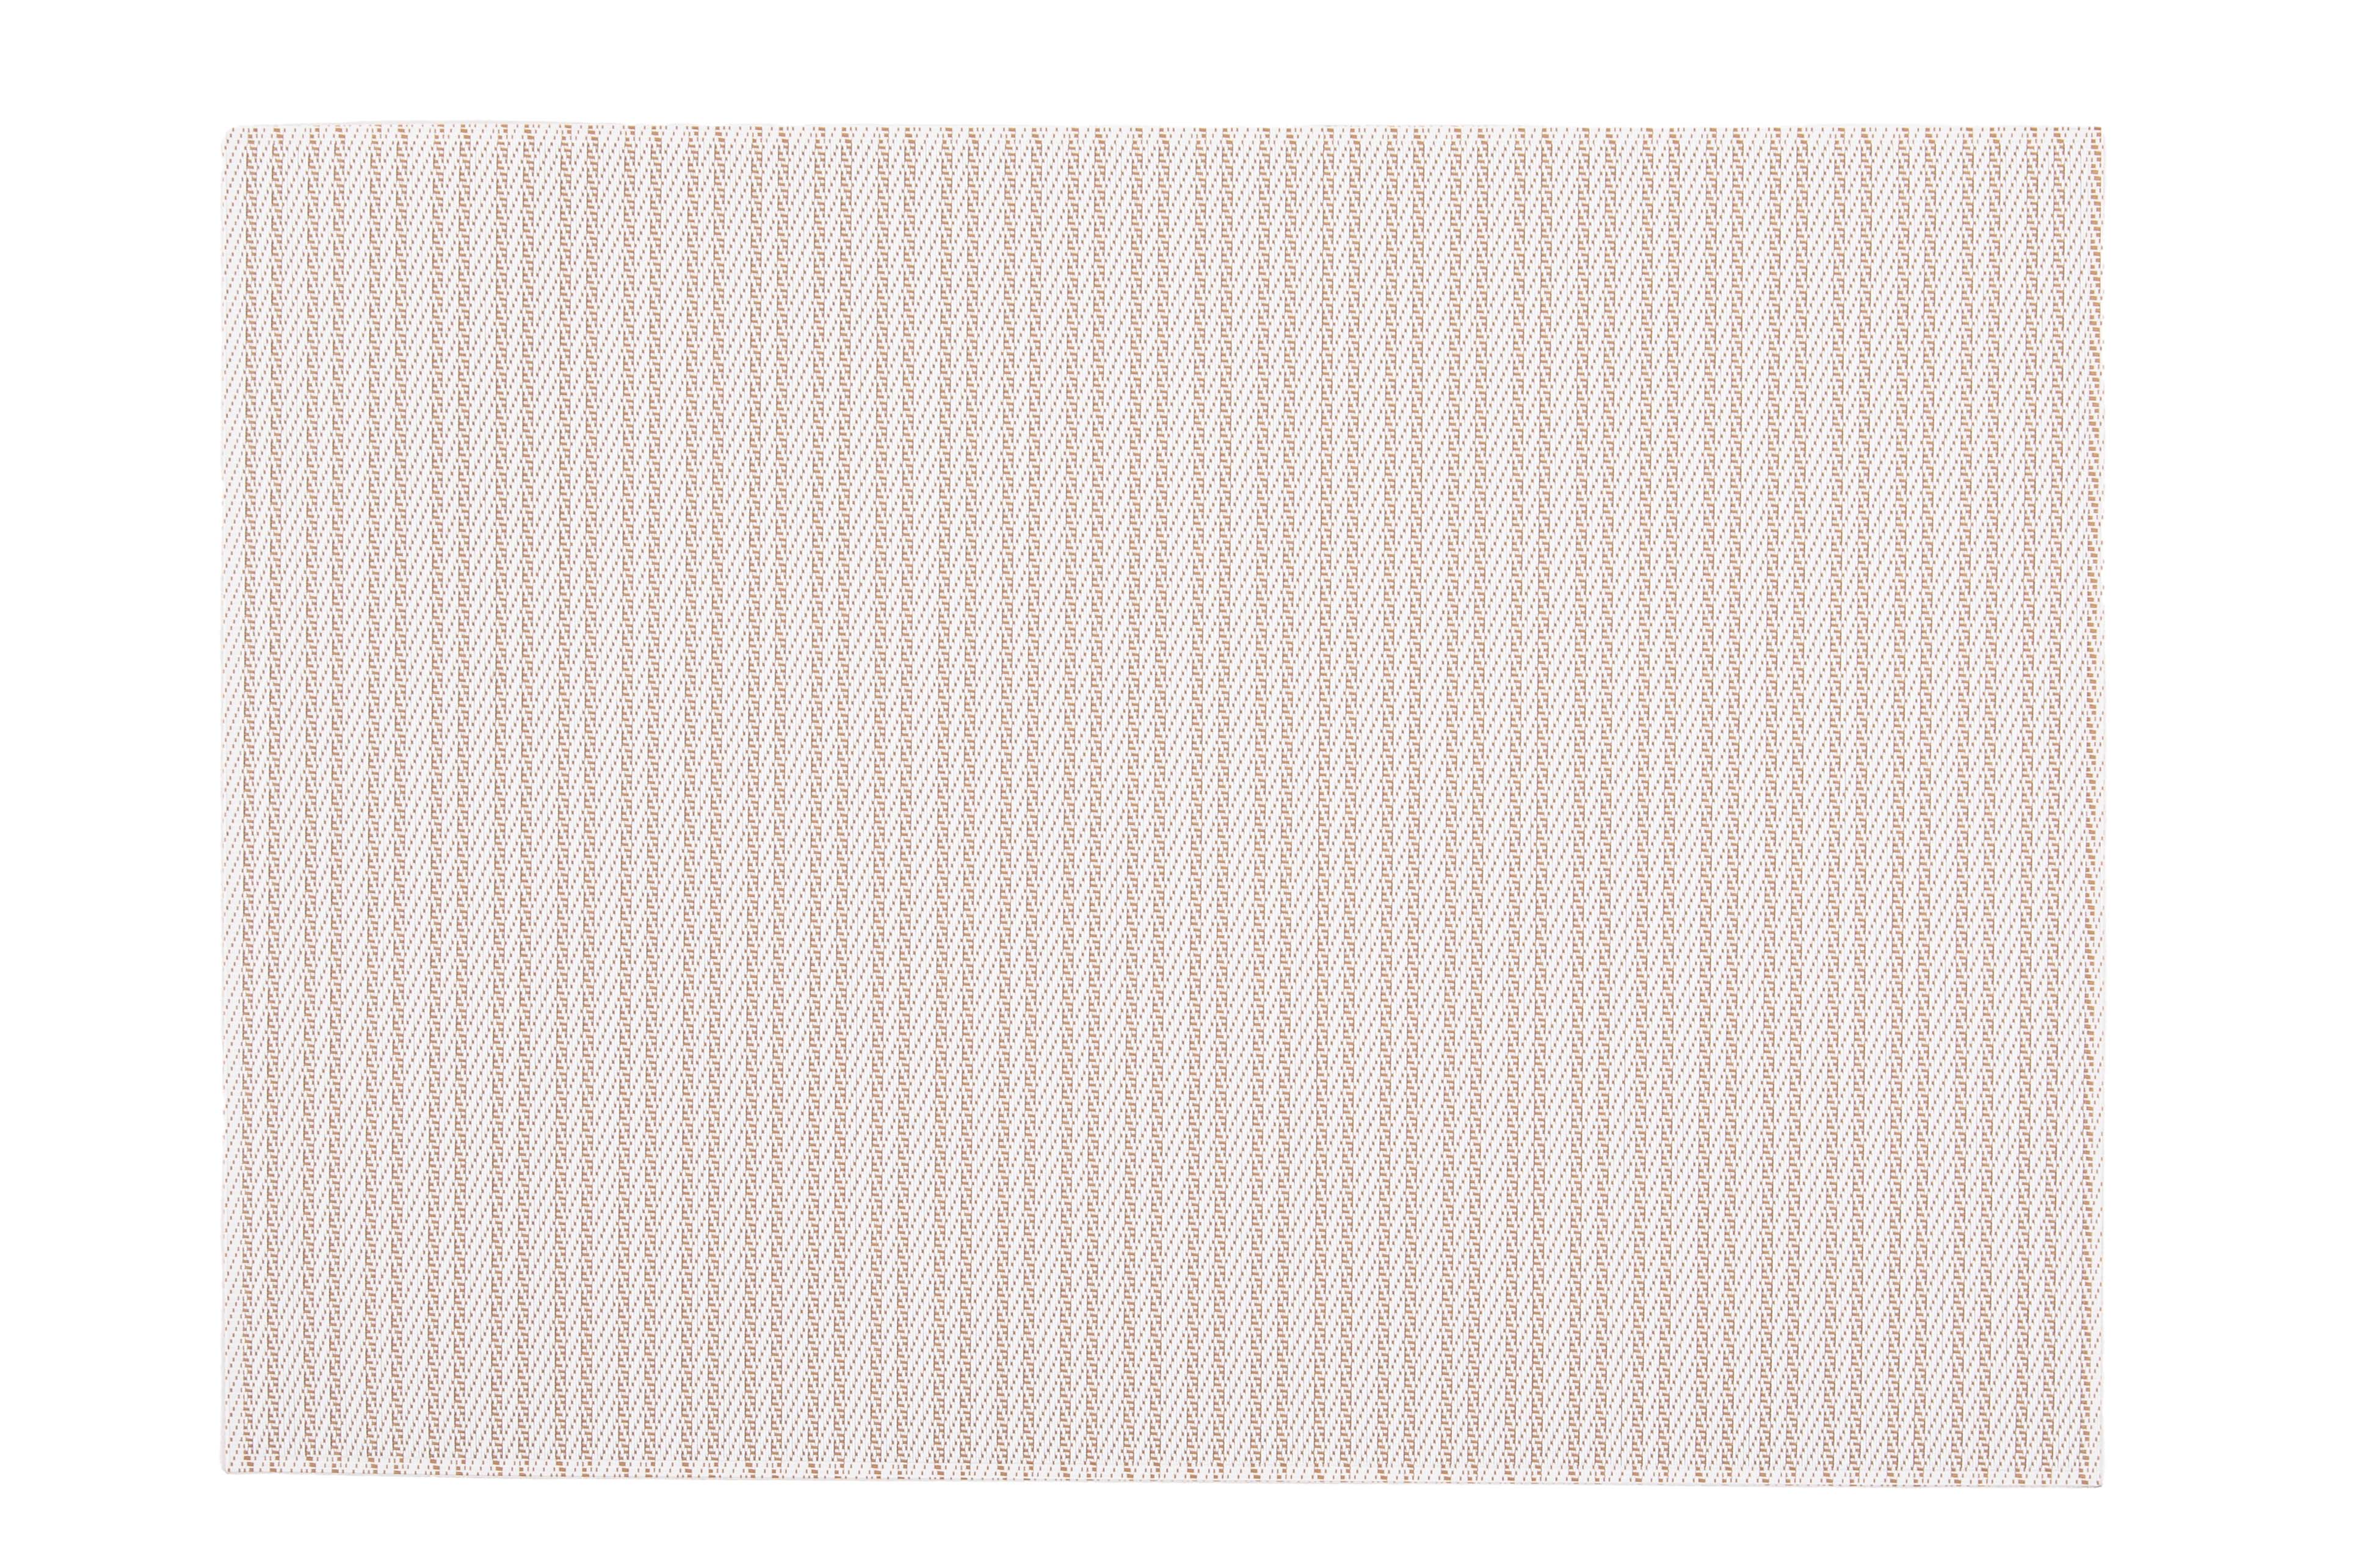 Placemat FALLON rectangular, 33x45cm, double stripe sand